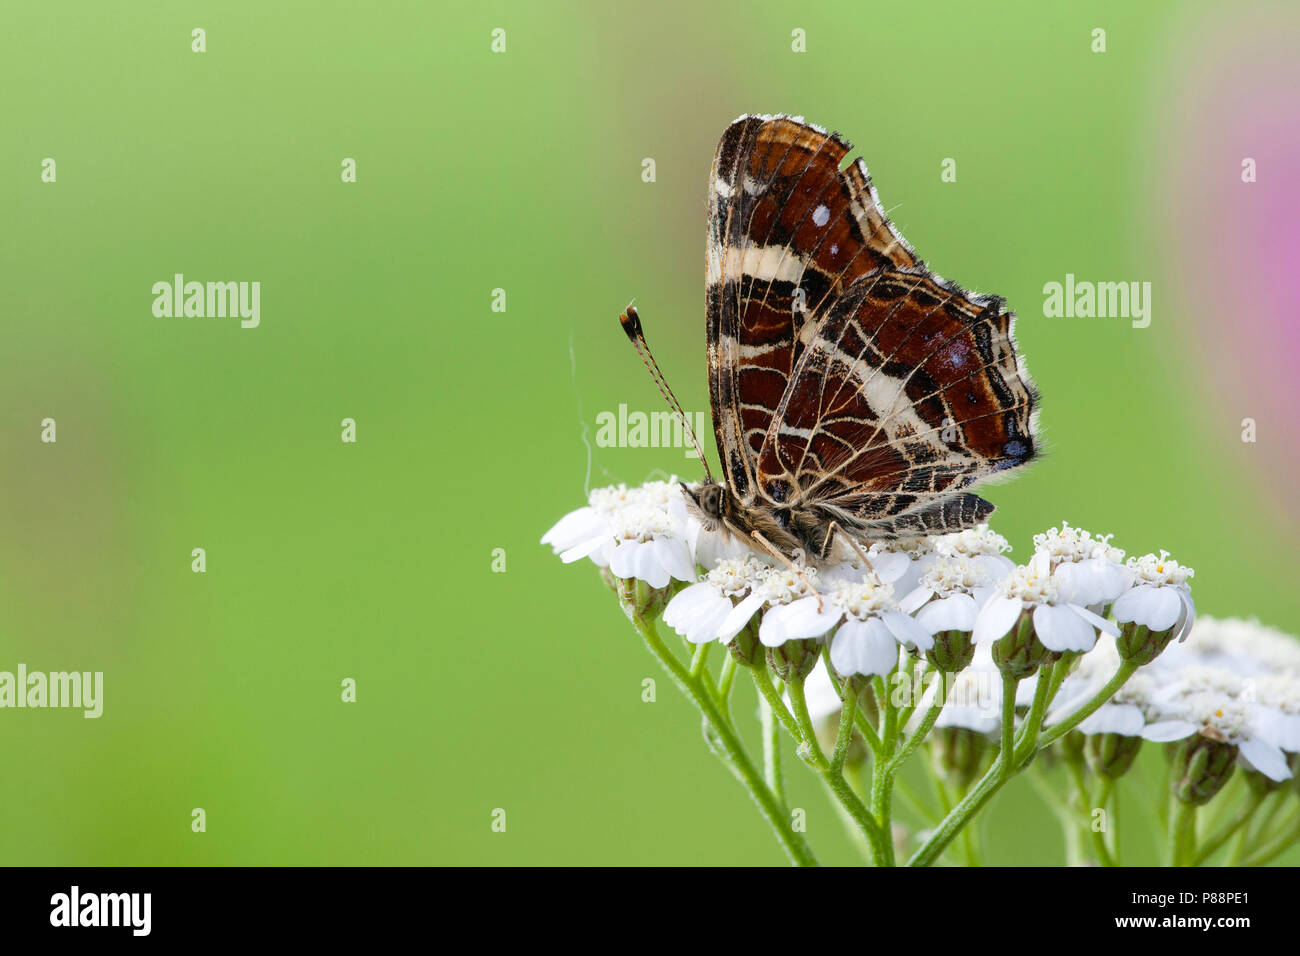 Tweede generatie Landkaartje / Second generation Map butterfly (Araschnia levana prorsa) Stock Photo